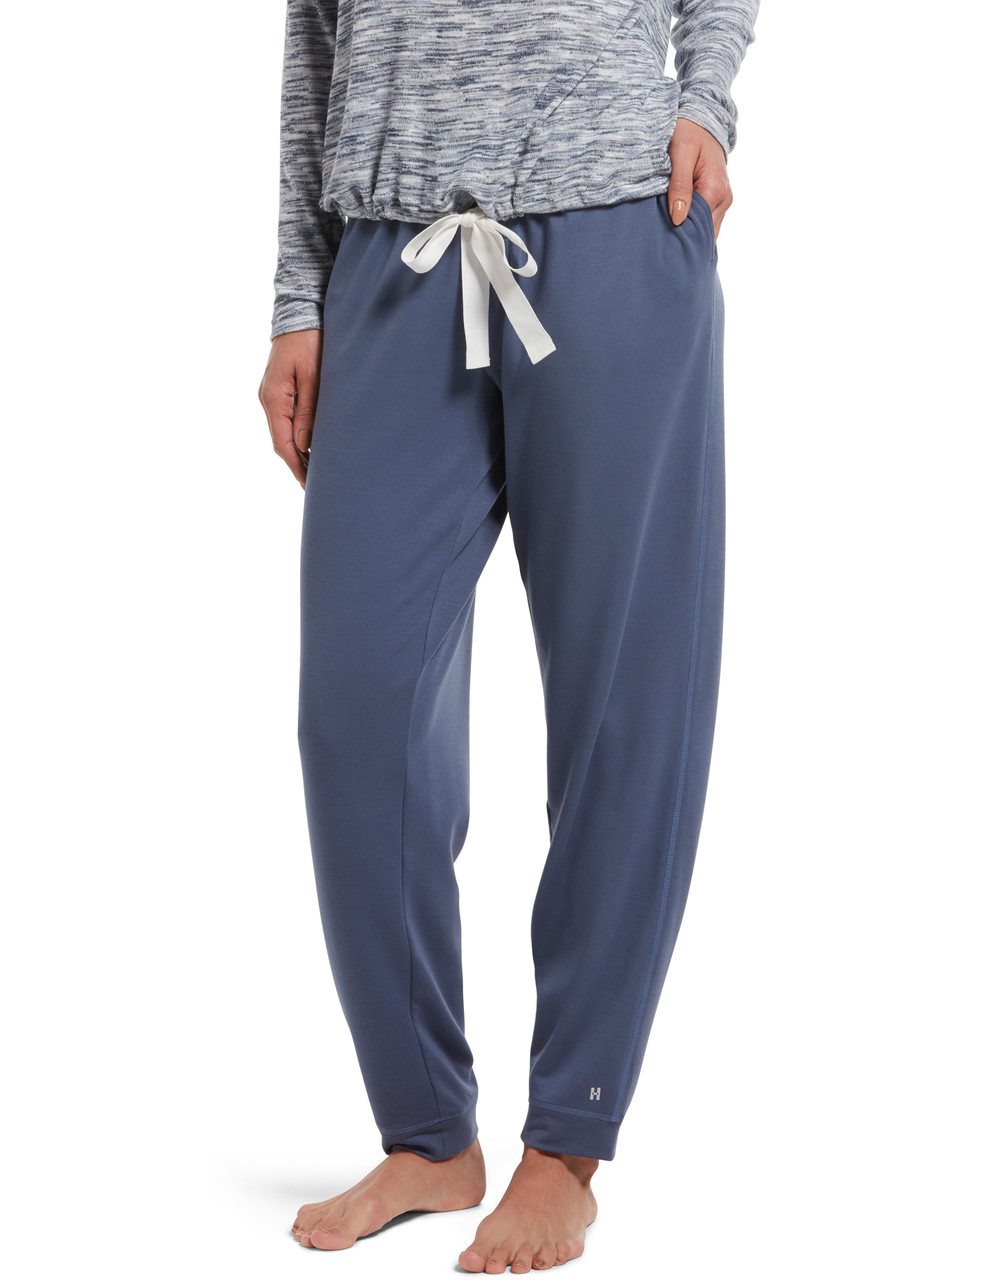 HIMONE Womens Stretch Pajamas Lounge Pants with Pockets High